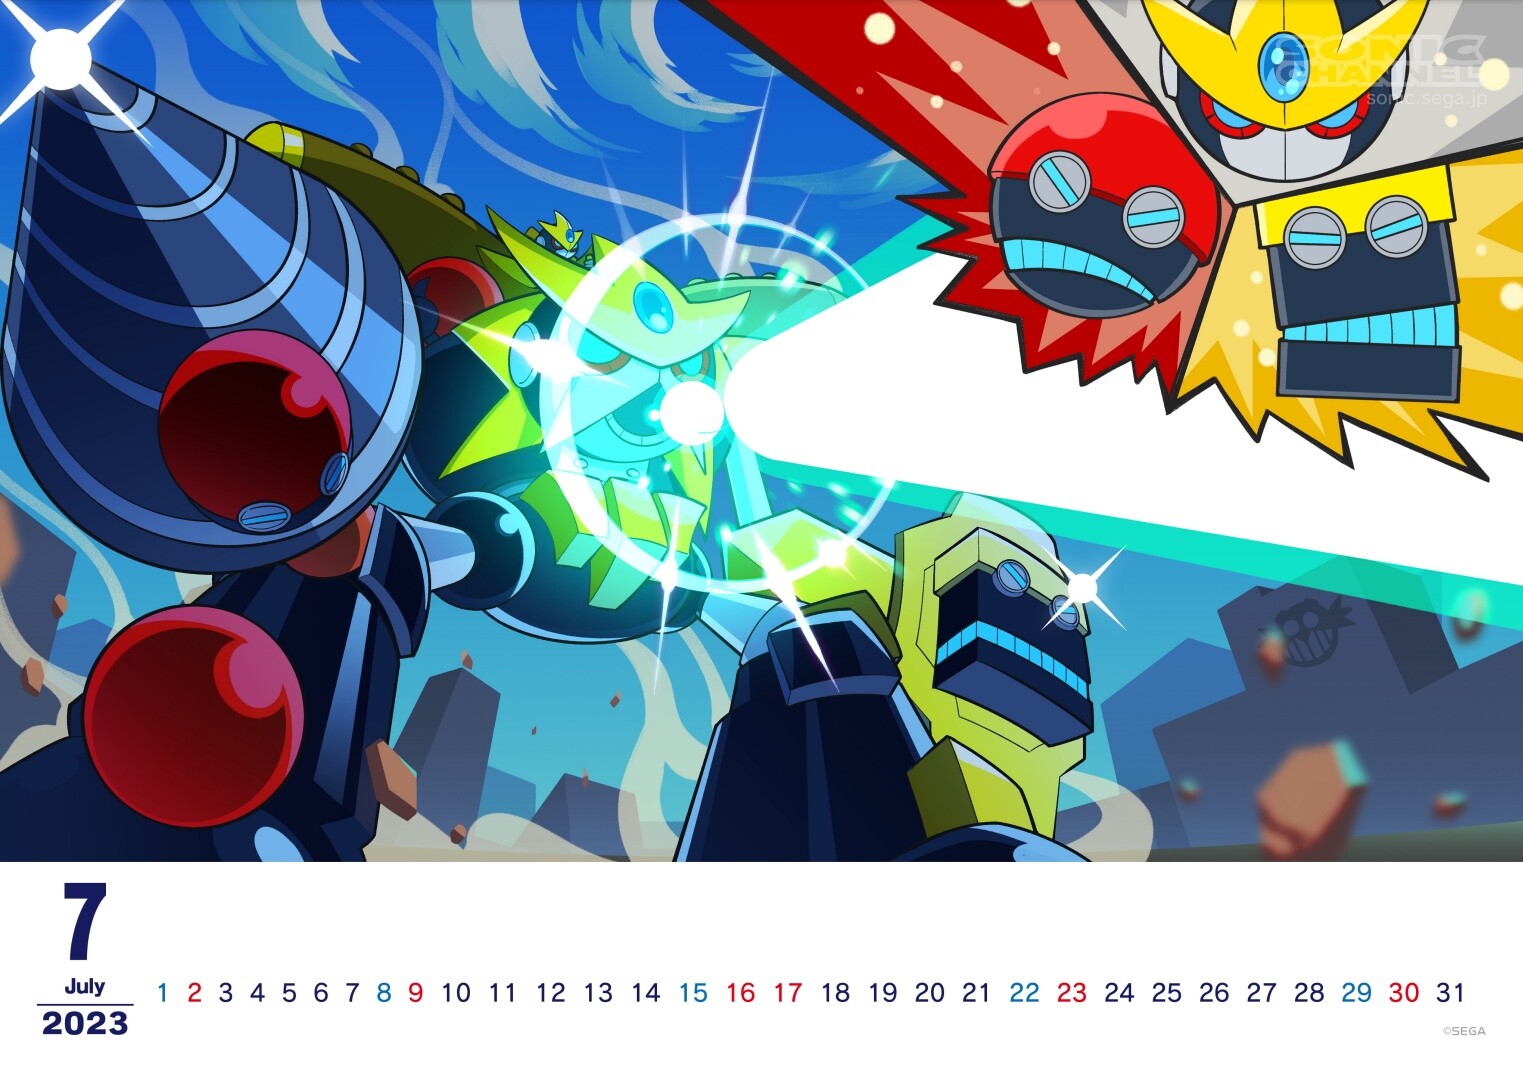 Gemerl, Orbot & Cubot Form A Giant Megazord in New Sonic Calendar Art -  Sonic - Sonic Stadium